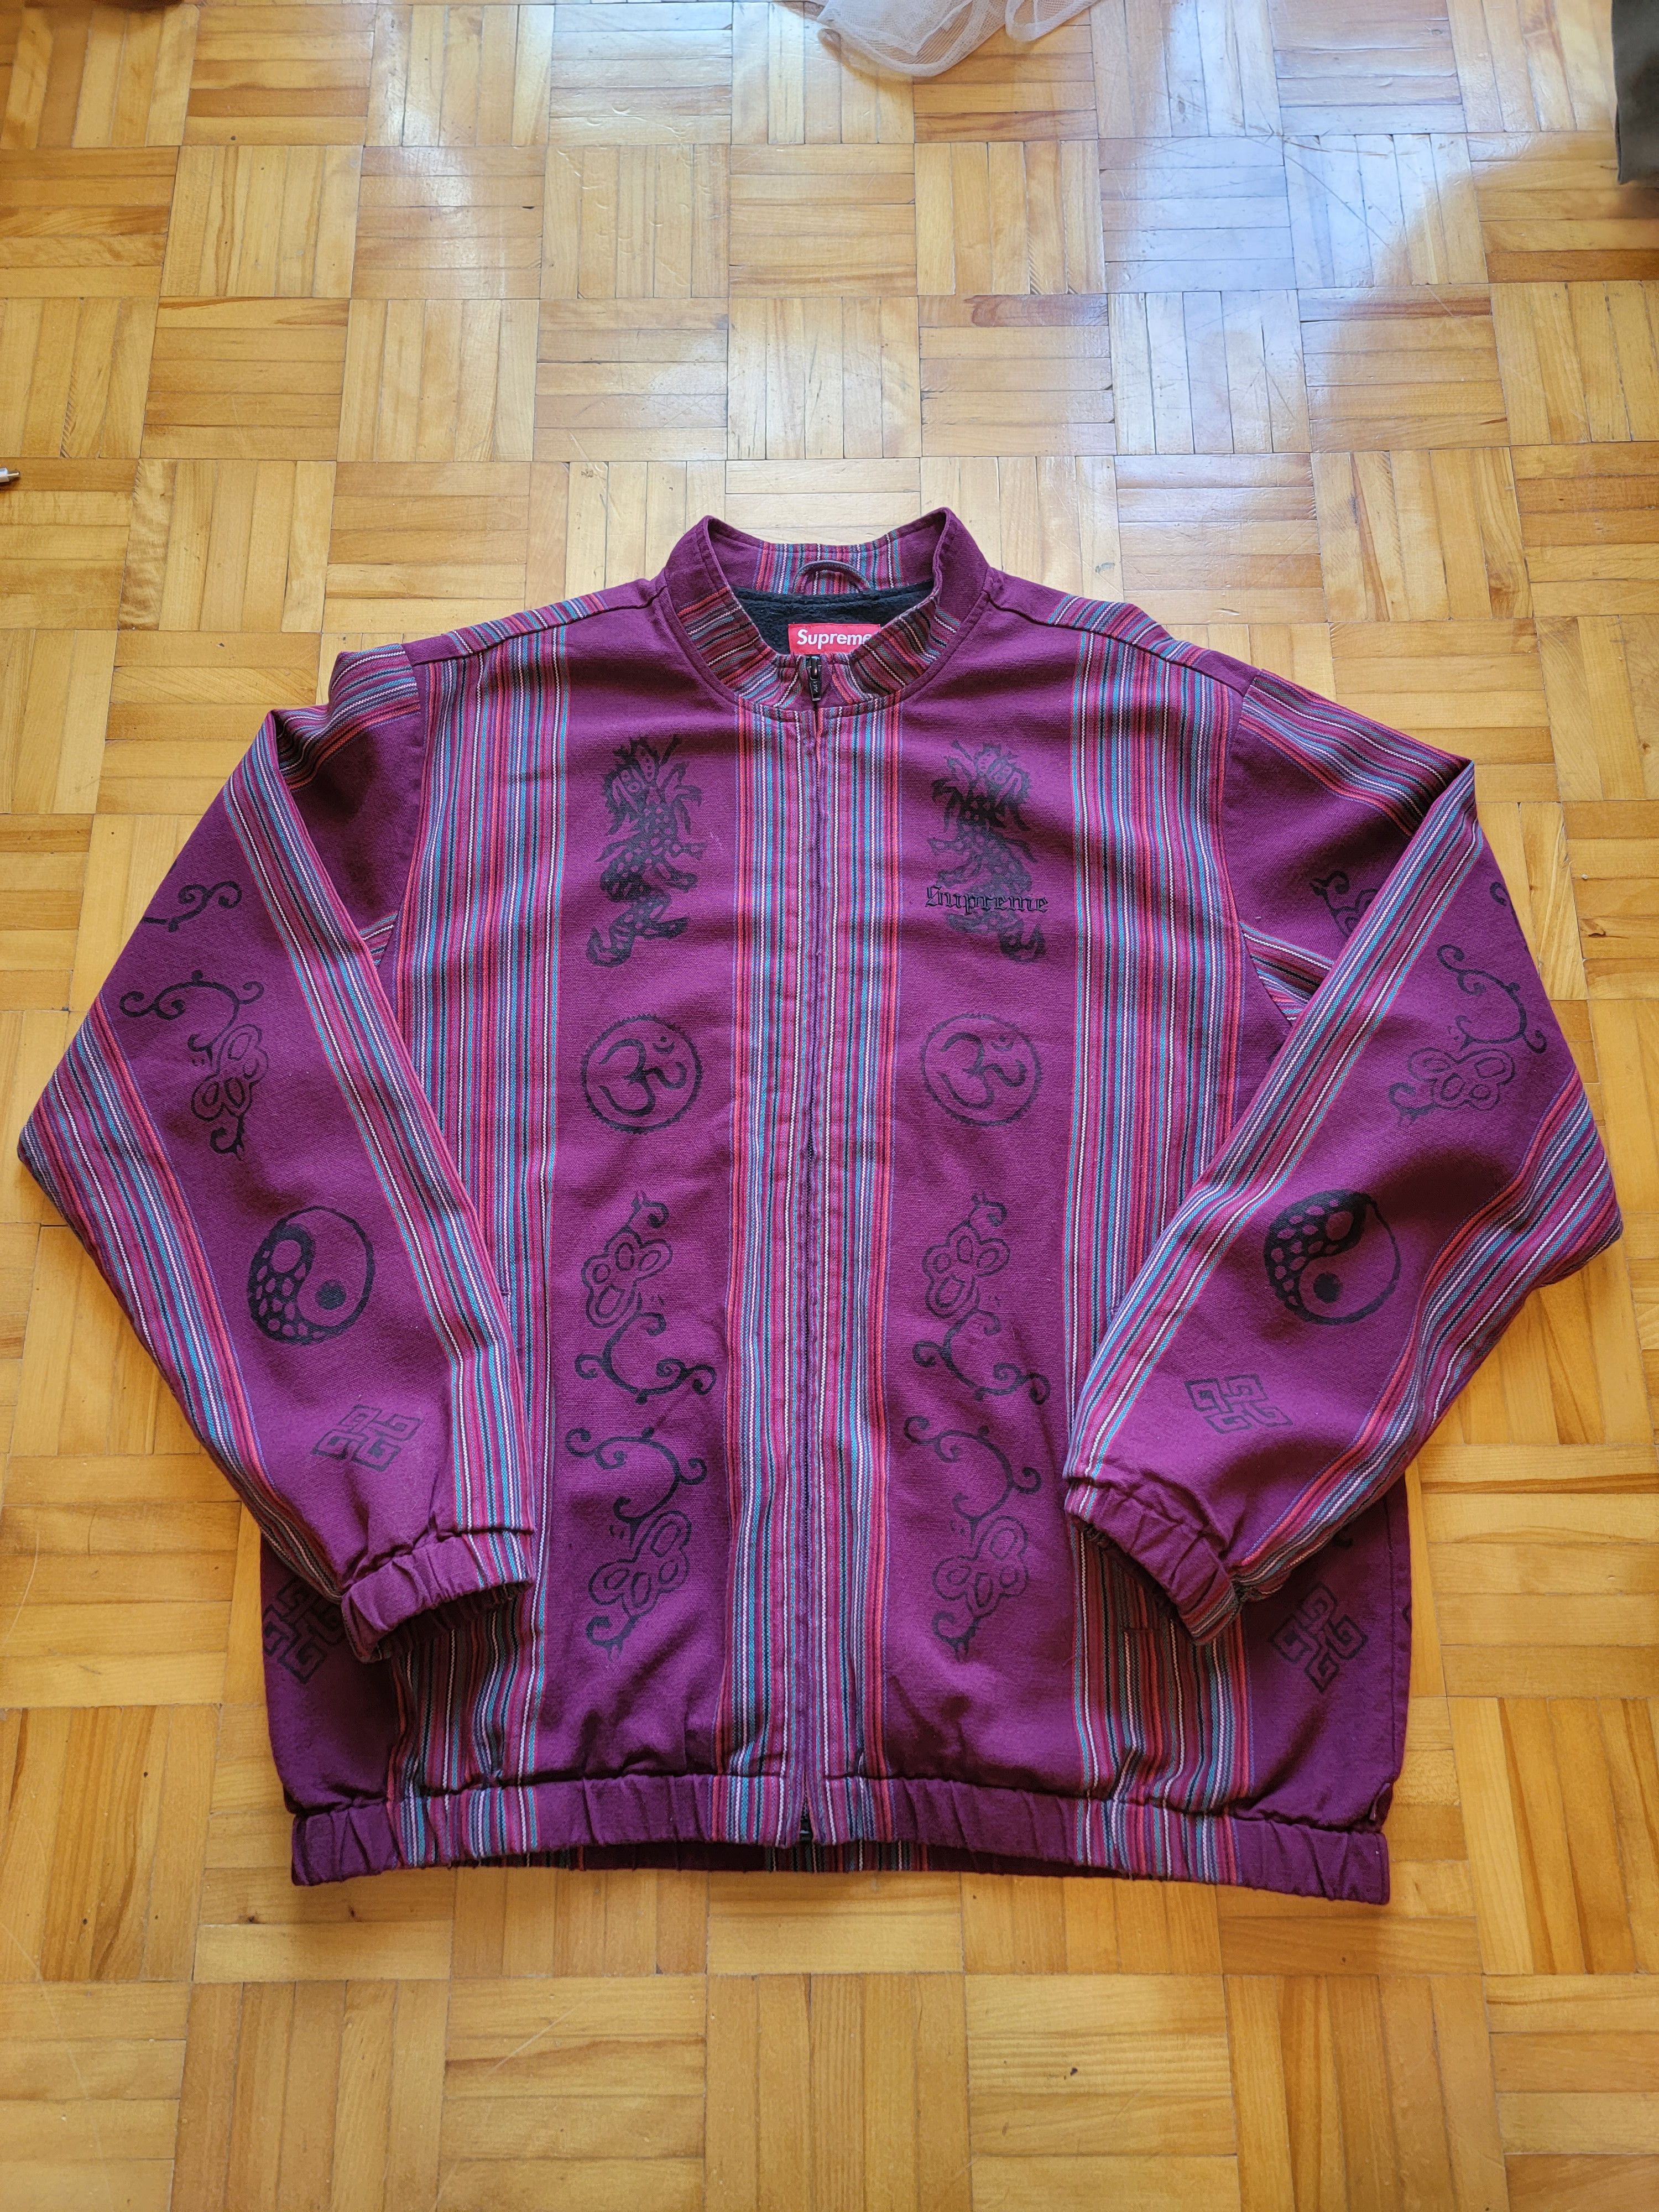 Supreme Supreme woven striped batik jacket | Grailed